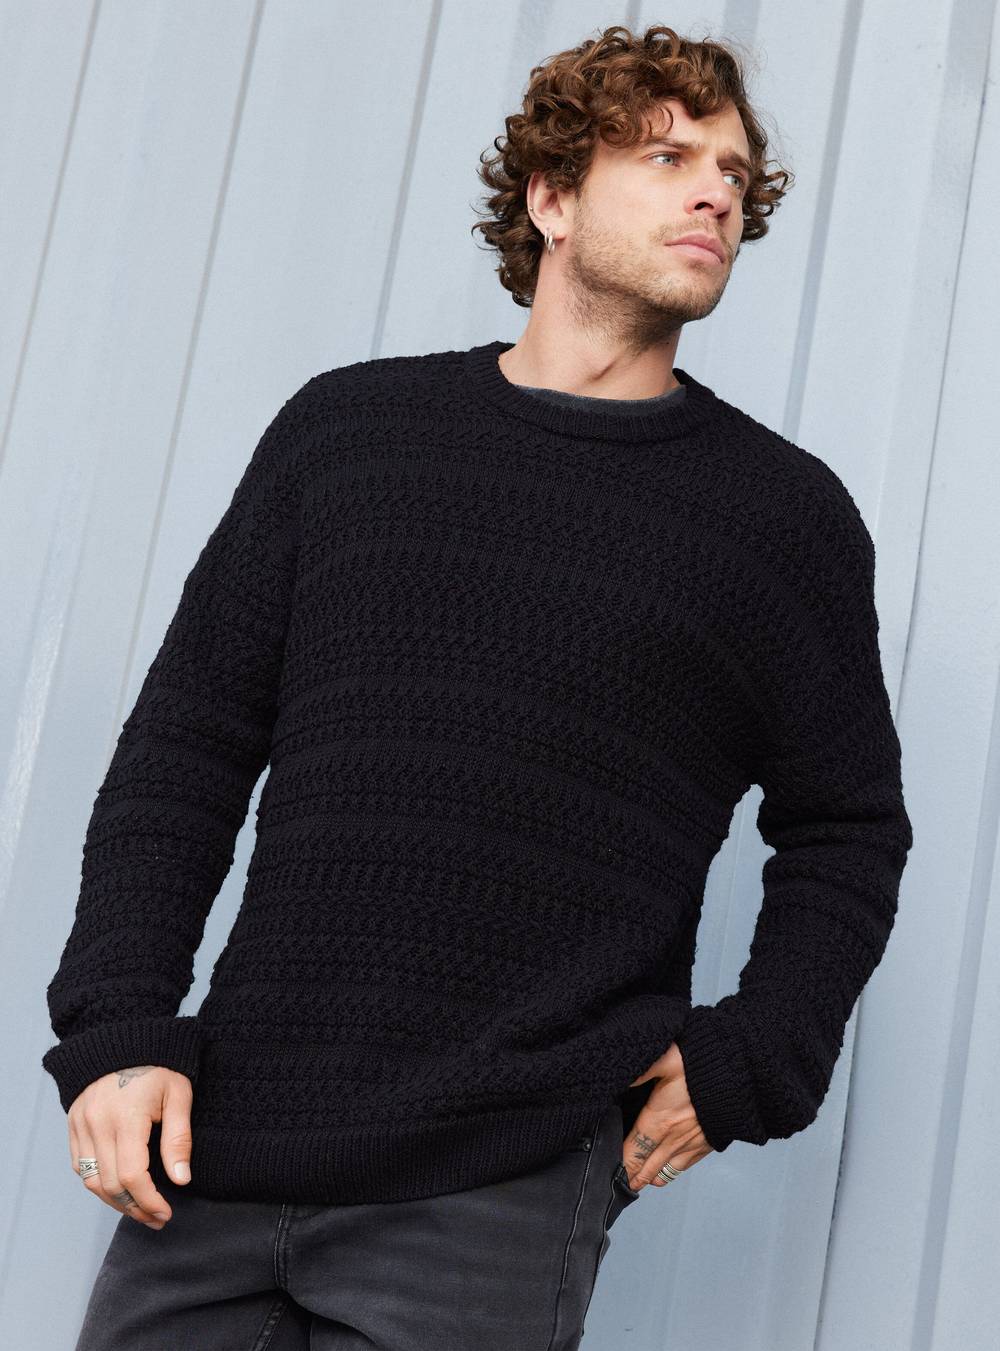 Foster sweater cr bassic textura tejido negro 'm